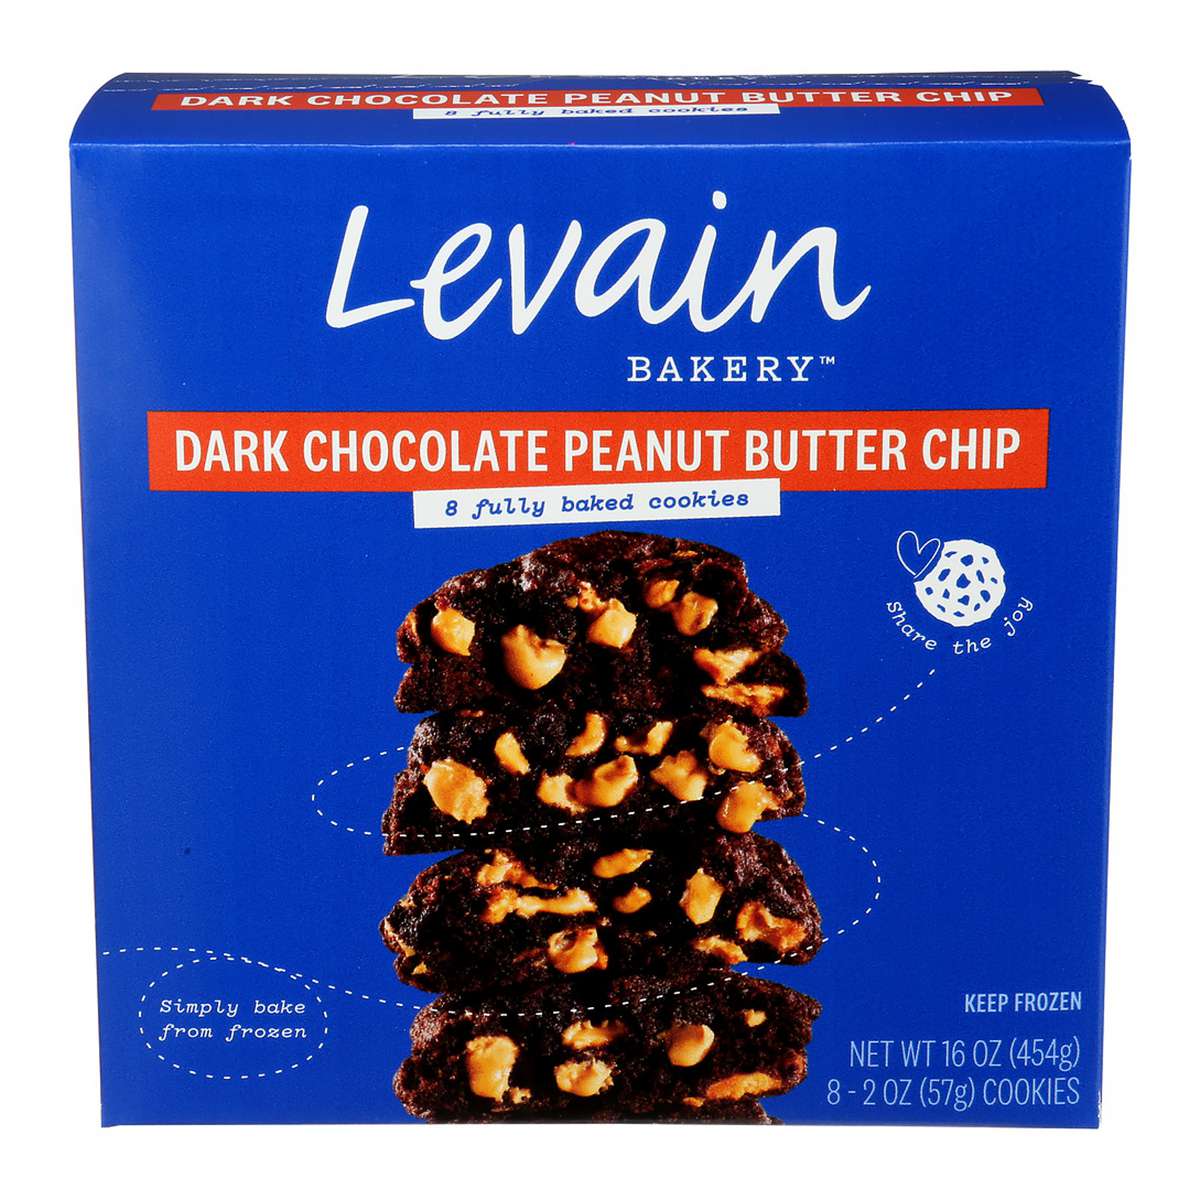 Levain Dark Chocolate Peanut Butter Cup